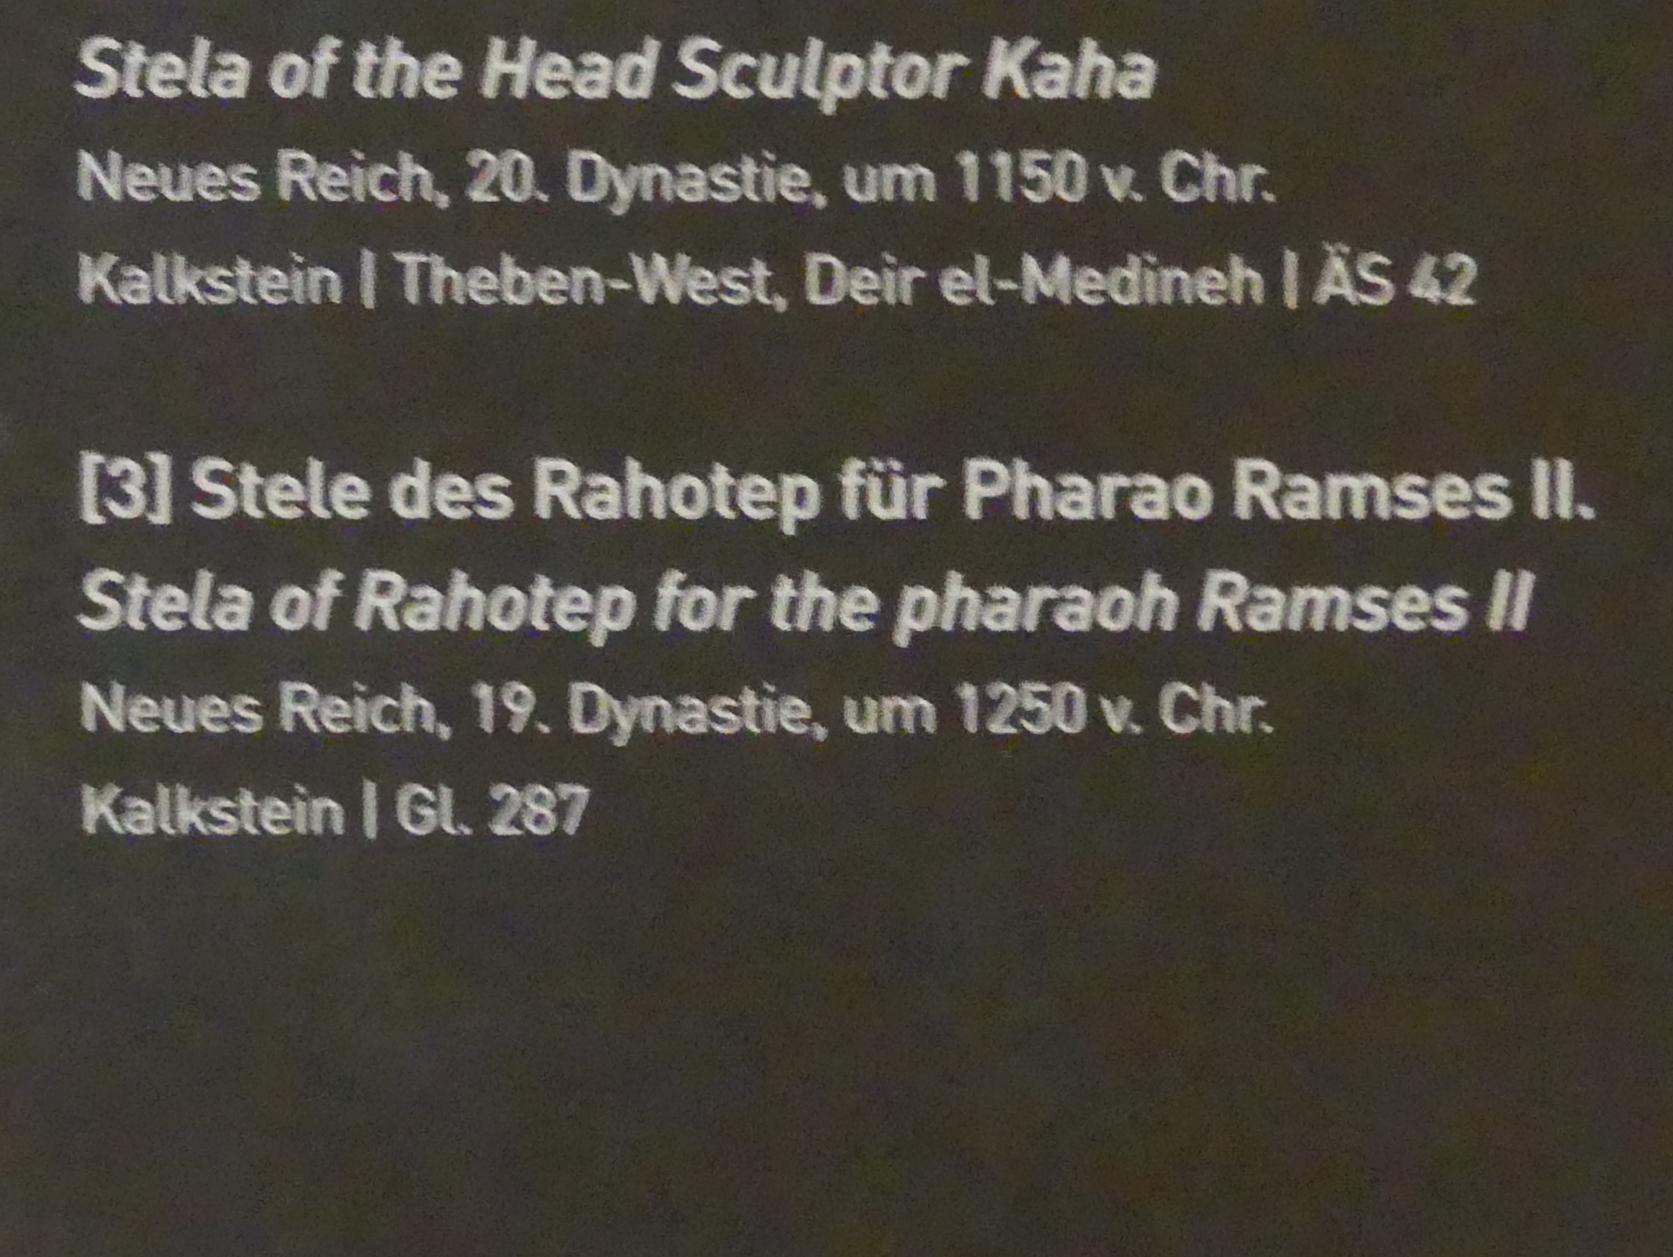 Stele des Rahotep für Pharao Ramses II., 19. Dynastie, 953 - 887 v. Chr., 1250 v. Chr., Bild 2/2